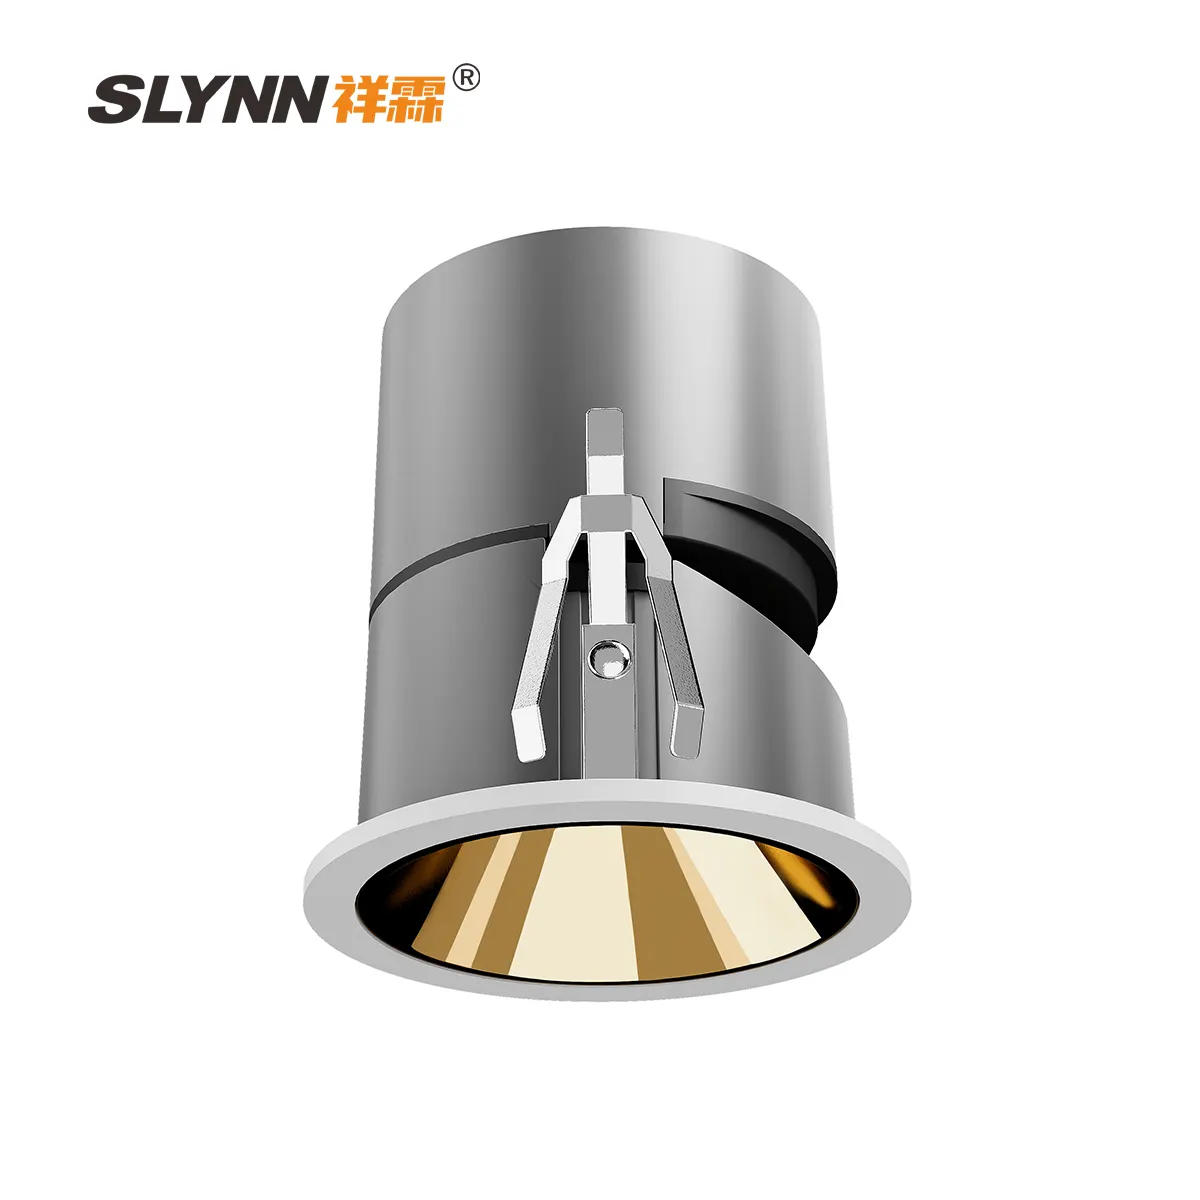 SLYNN Commercial Ceiling Downlight Waterproof Down light Led Surface Anti Glare Gu10 COB Downlight